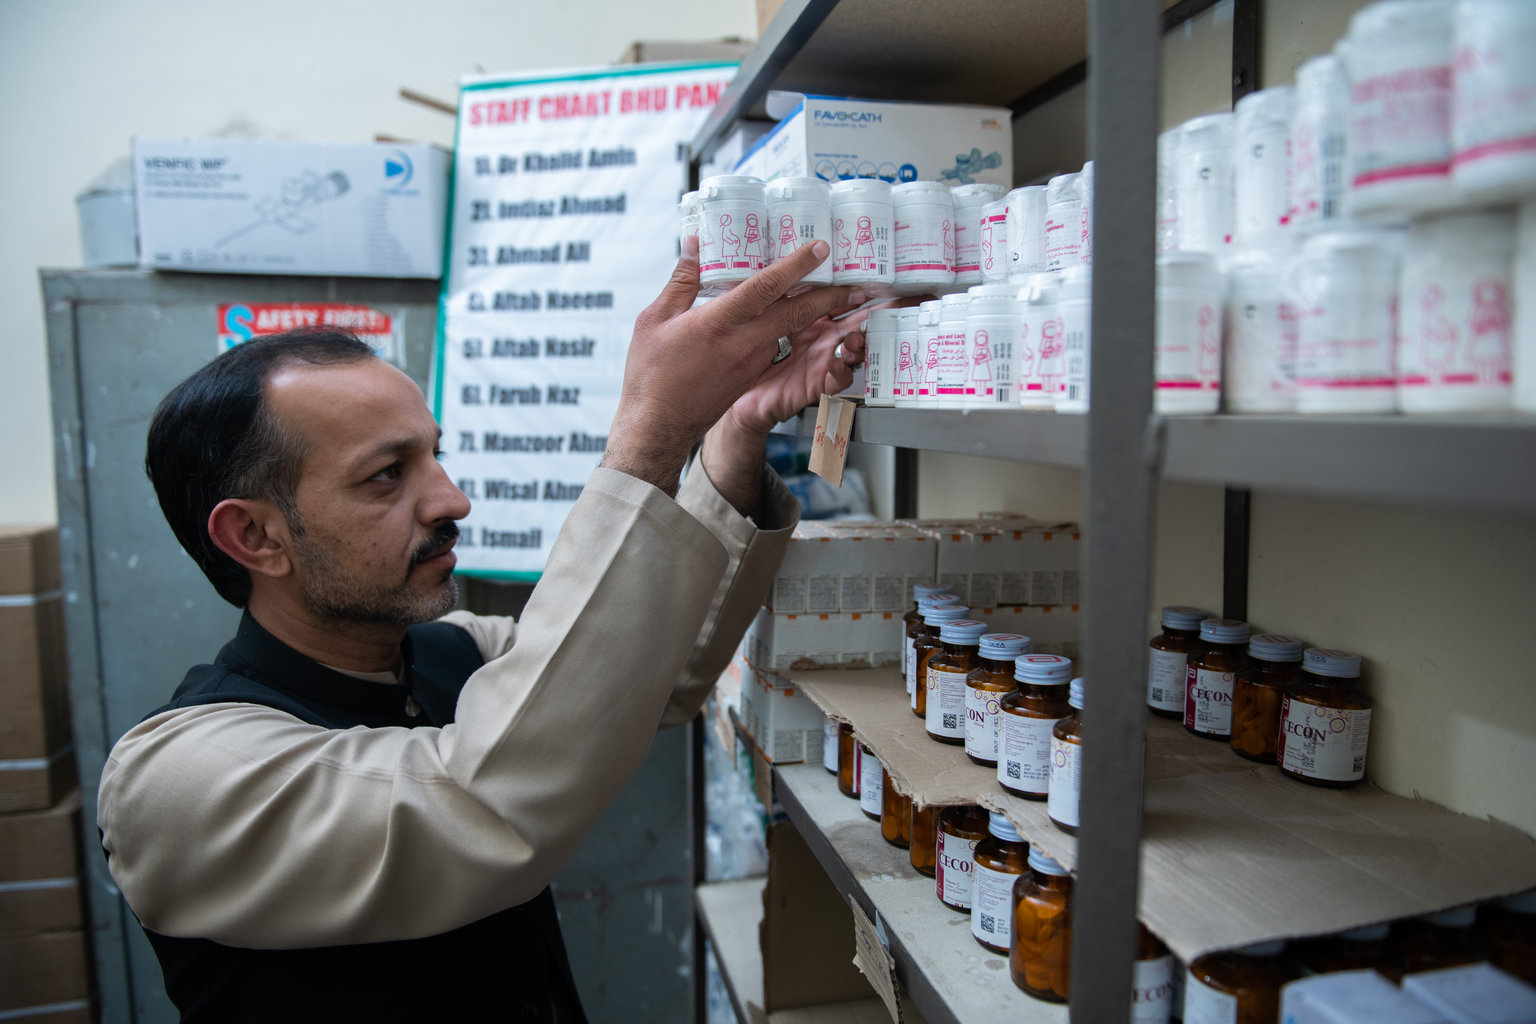 A man lifts a package of supplementation bottles onto a shelf.